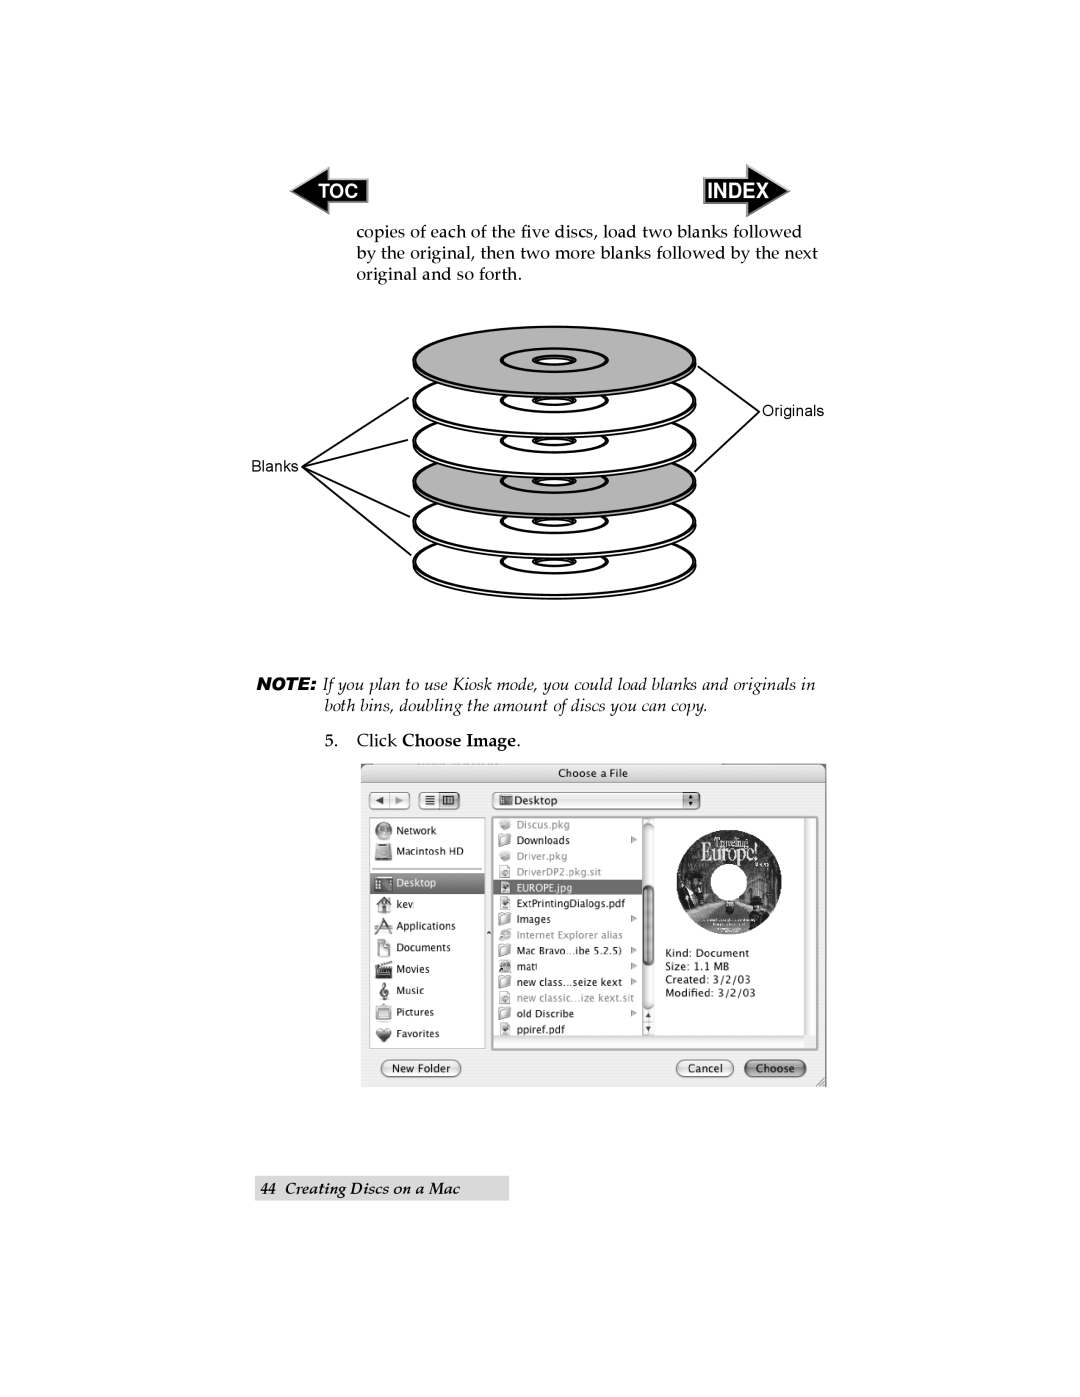 Primera Technology II user manual Index, Click Choose Image, Creating Discs on a Mac 